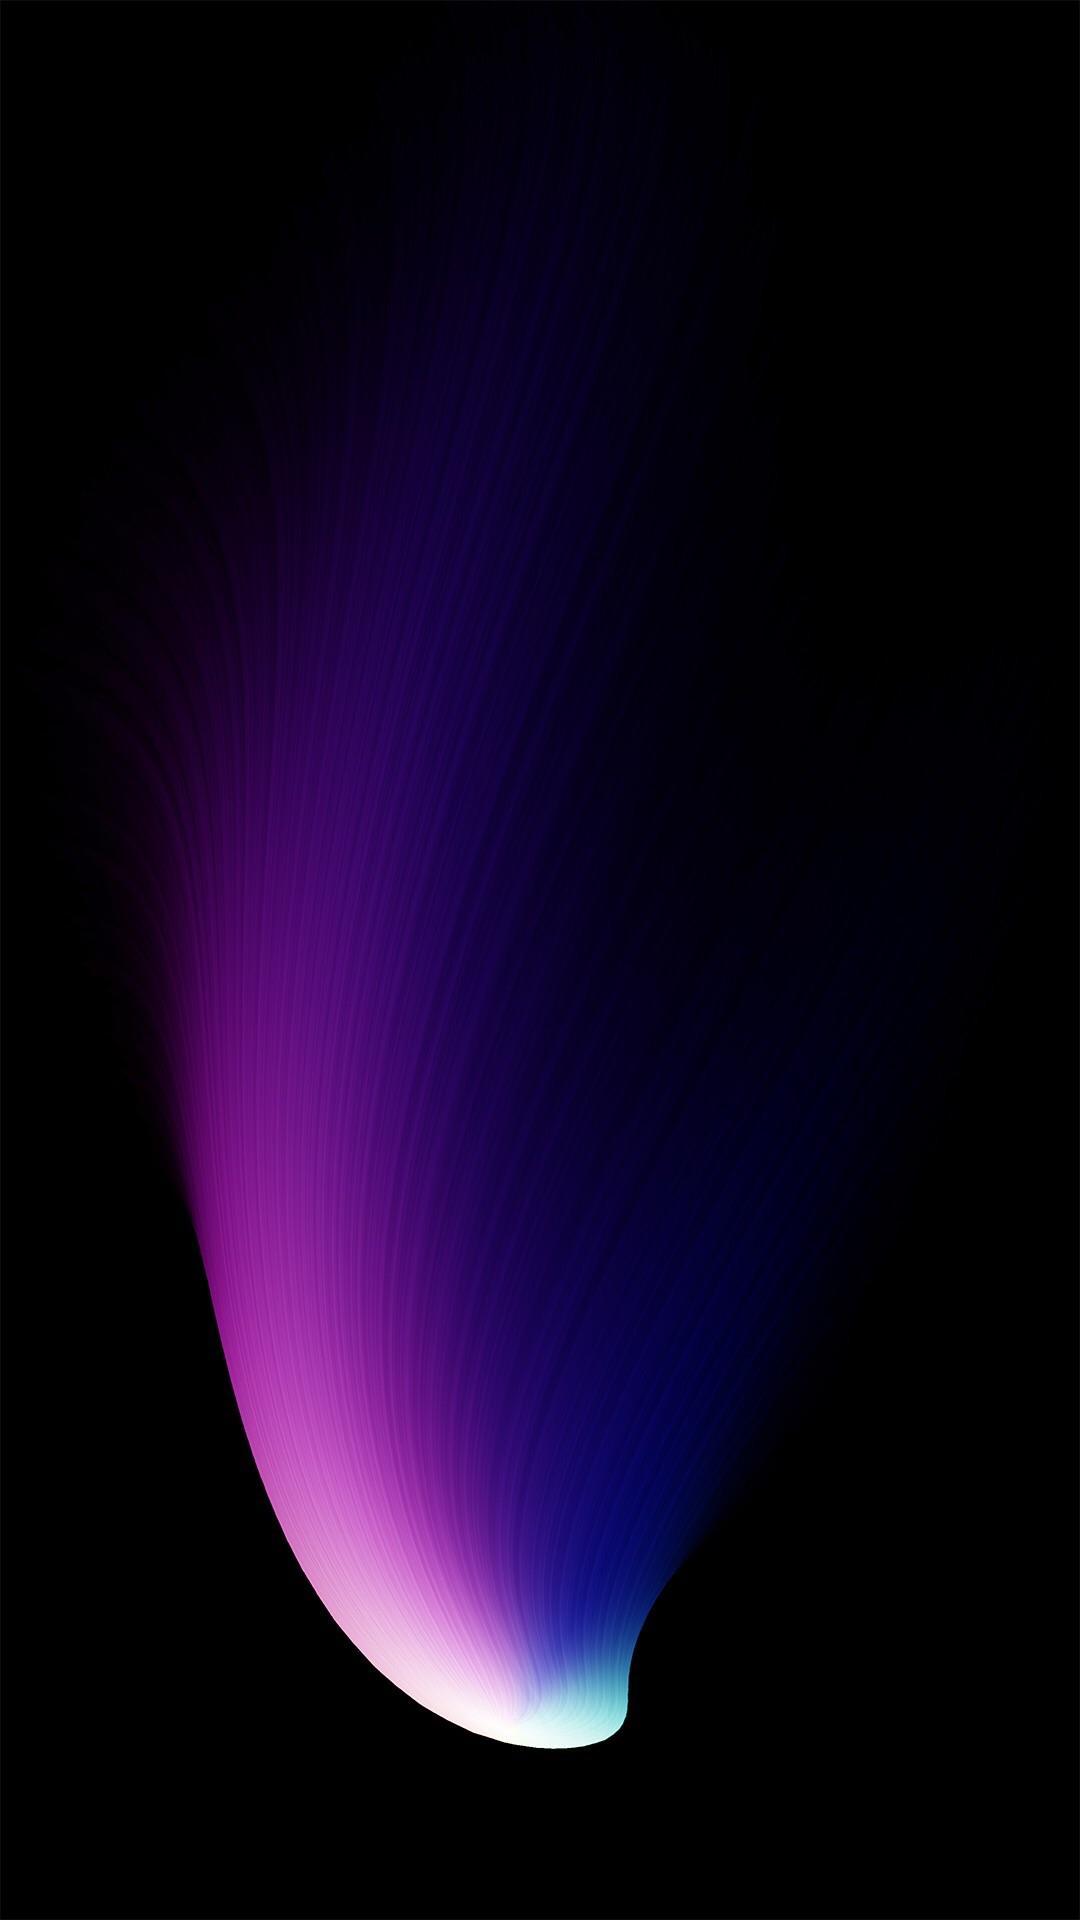 Cool gradient effect wallpaper when waking iPhone X lockscreen (1080x1920)